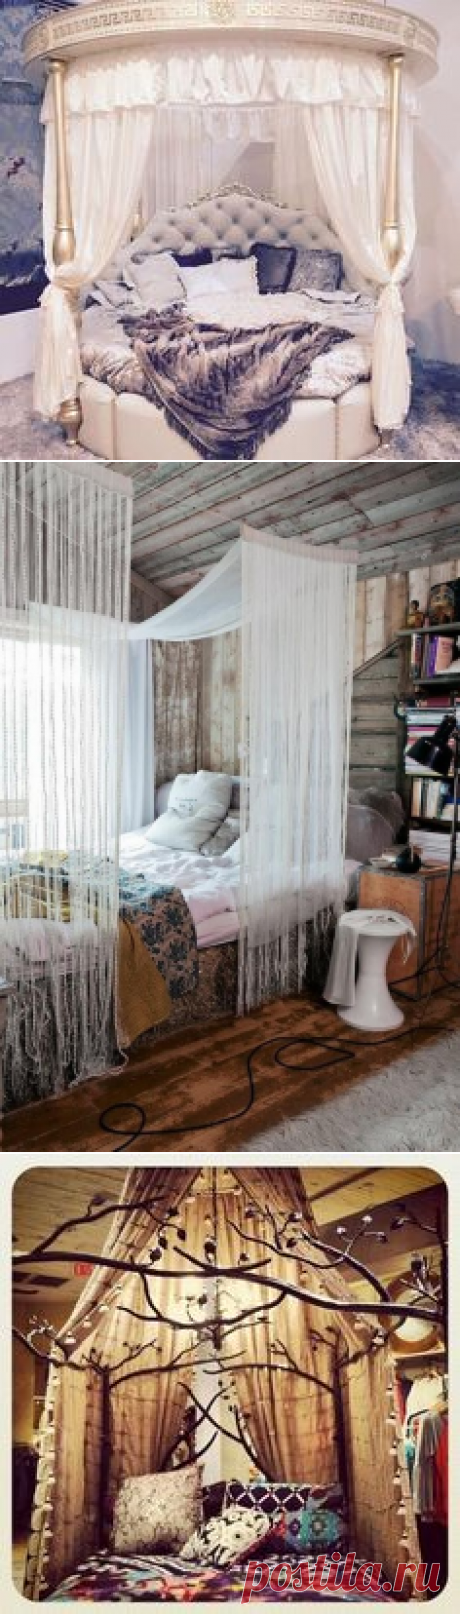 (128) bohemian bedroom ideas boho chic bedroom designs curtain dividers open shelves | Boho
Спальни